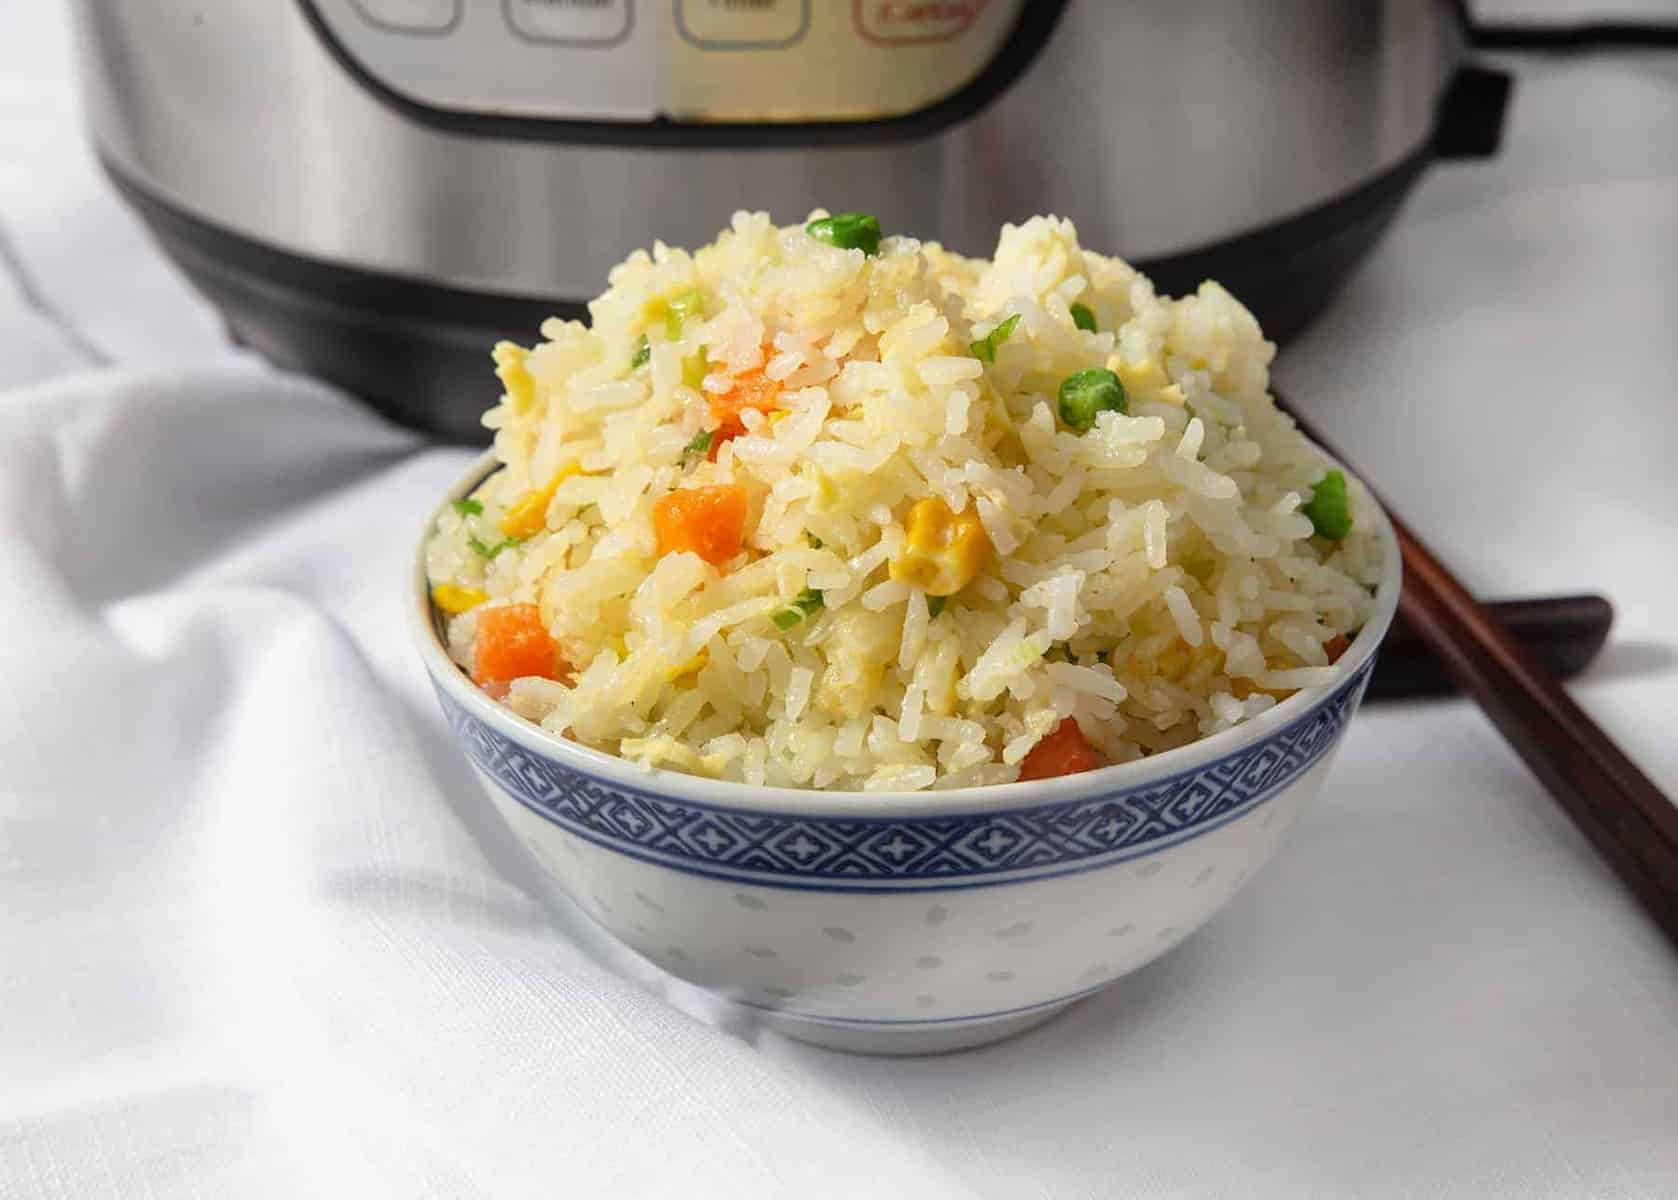 https://www.pressurecookrecipes.com/wp-content/uploads/2018/07/instant-pot-fried-rice-recipe.jpg